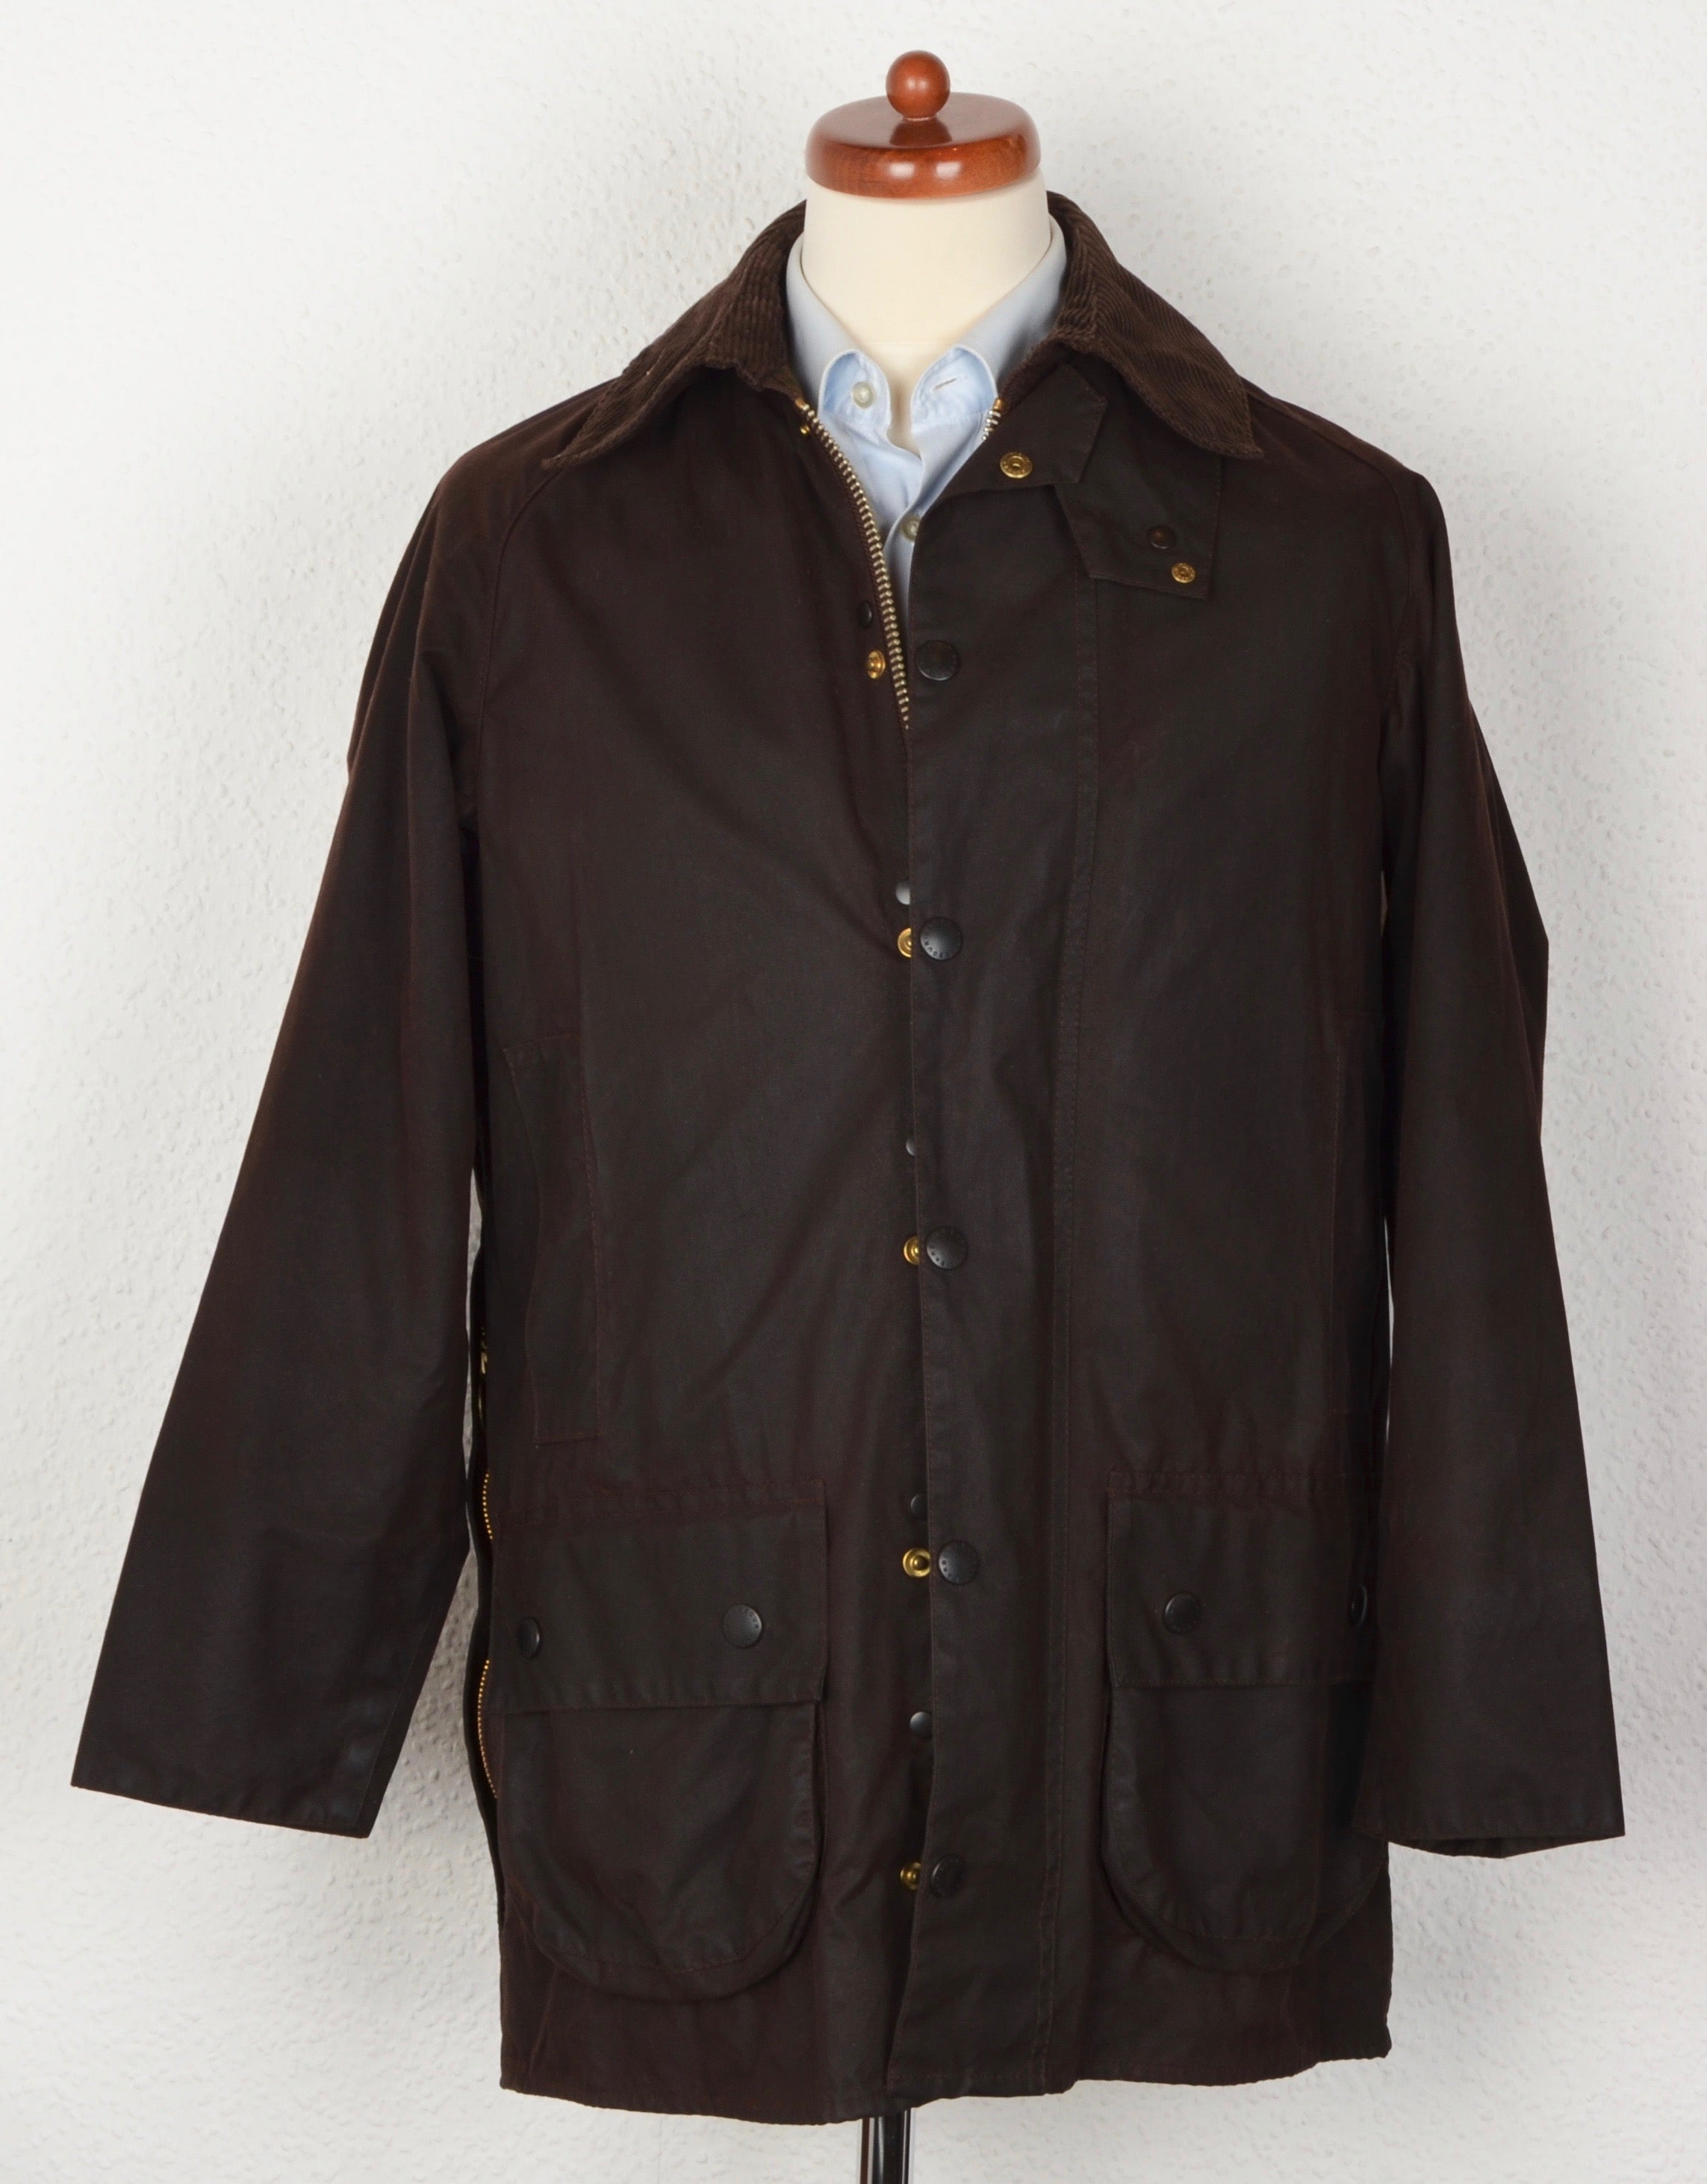 Barbour Beaufort Waxed Jacket Size C38/97cm - Brown – Leot James